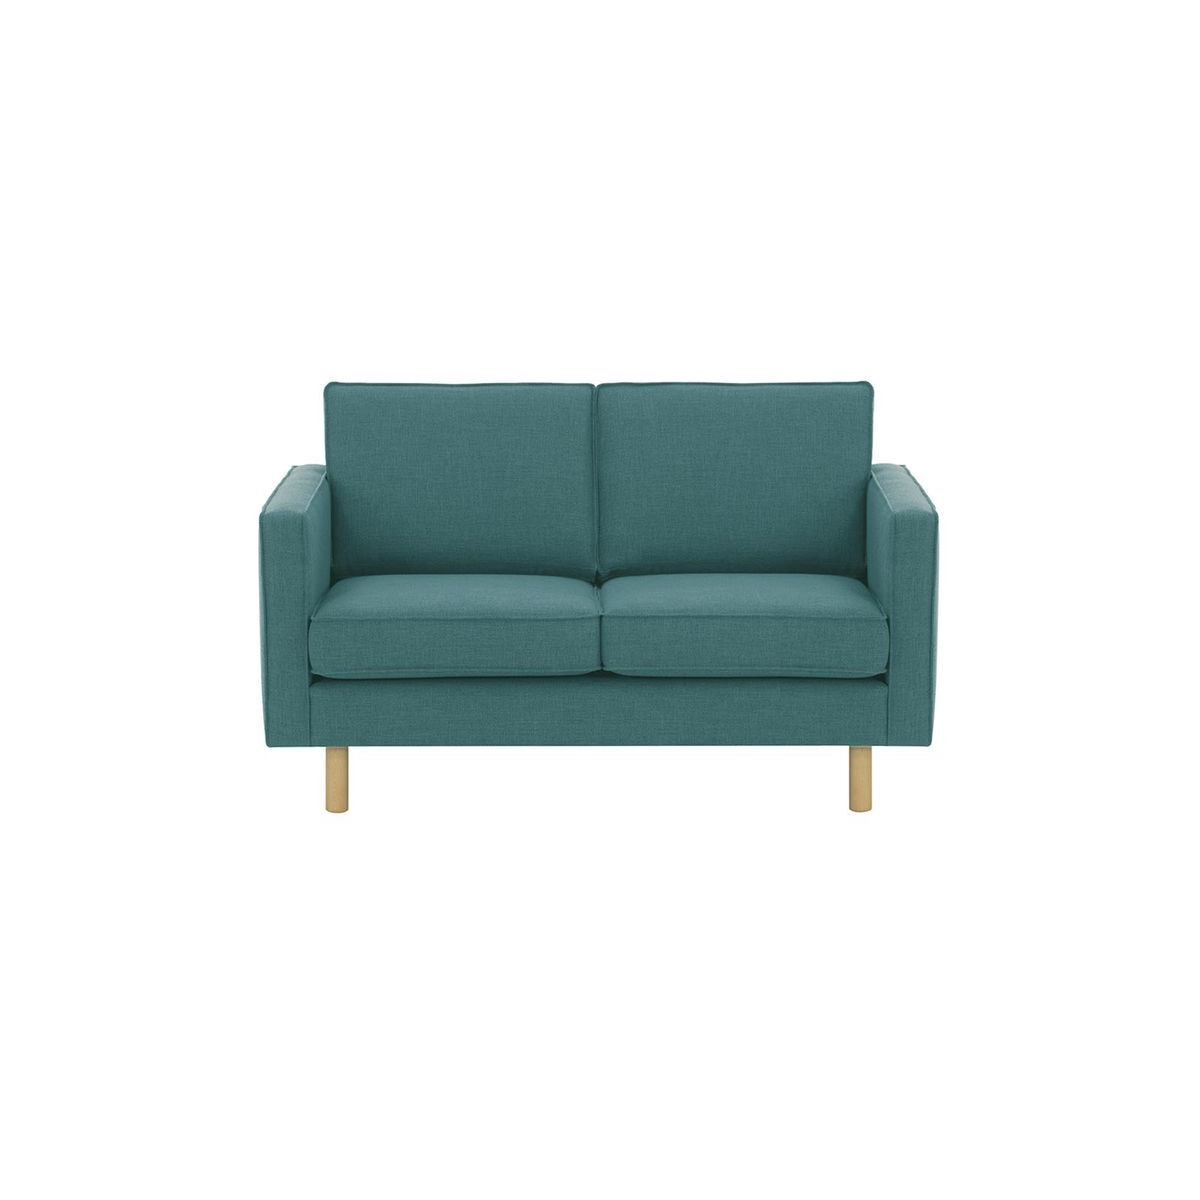 Coco 2 Seater Sofa, turquoise - image 1